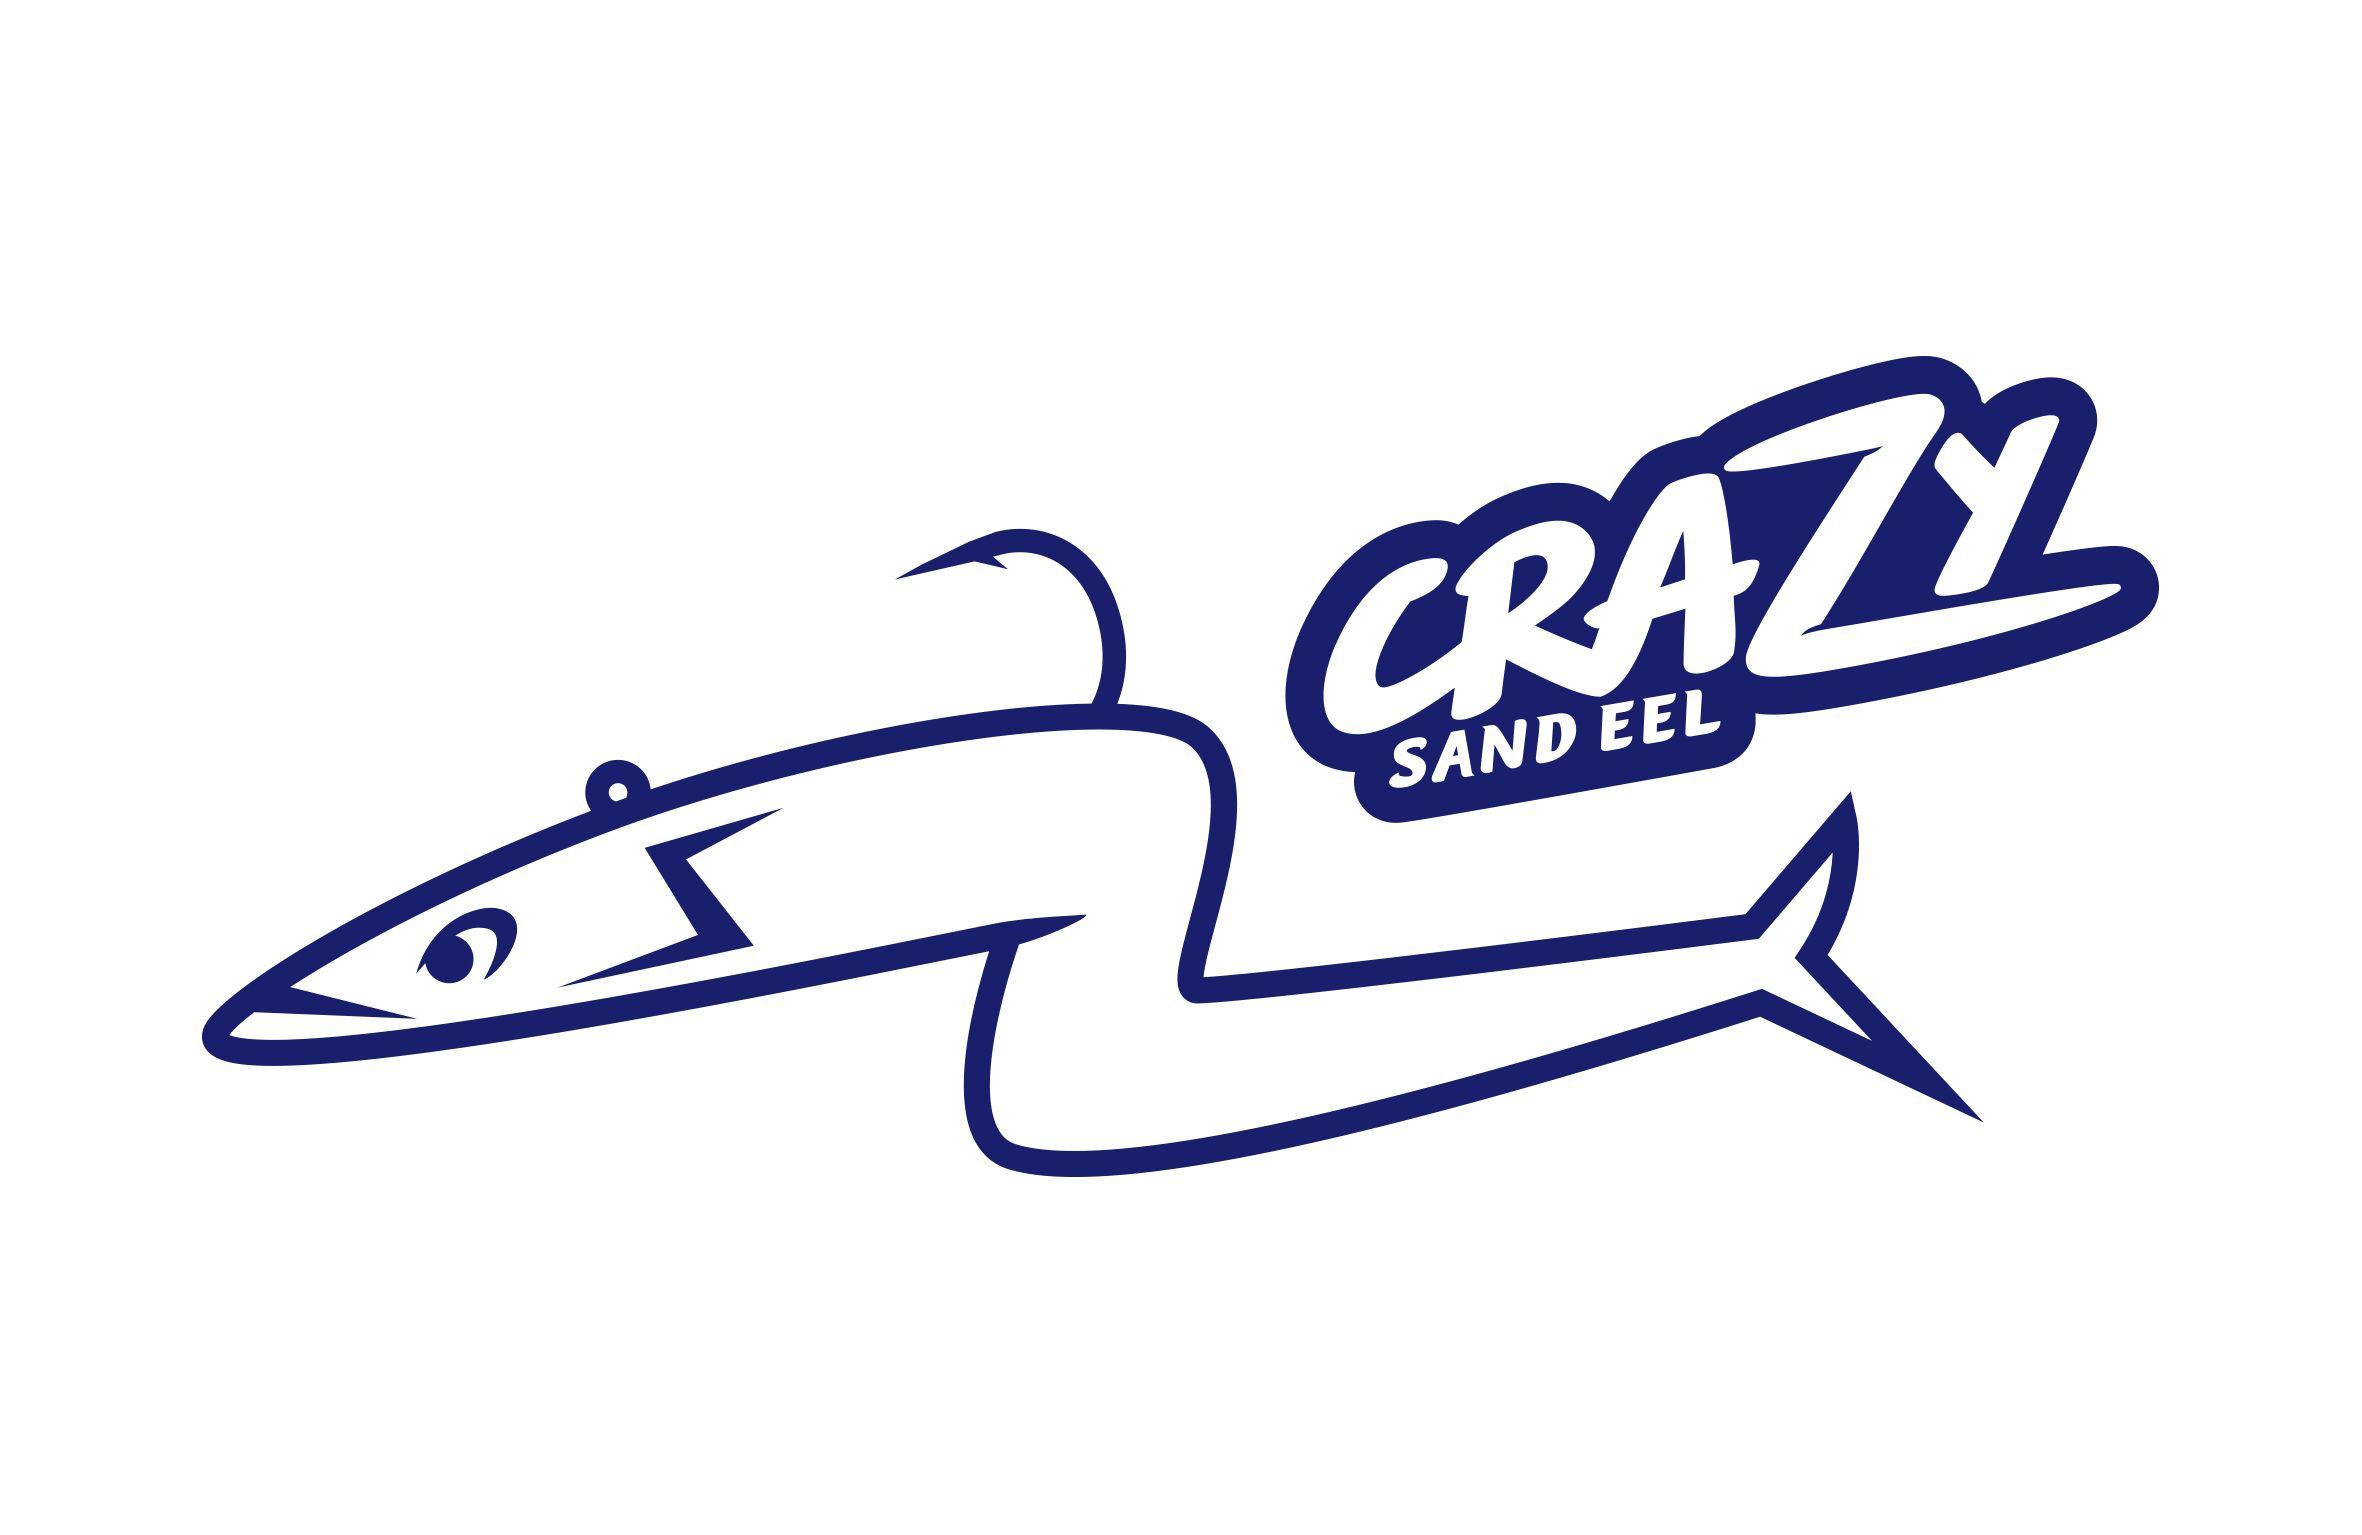 Eel Logo - Fiiish Crazy Sand Eels - VMO - Veals Mail Order - The Blog